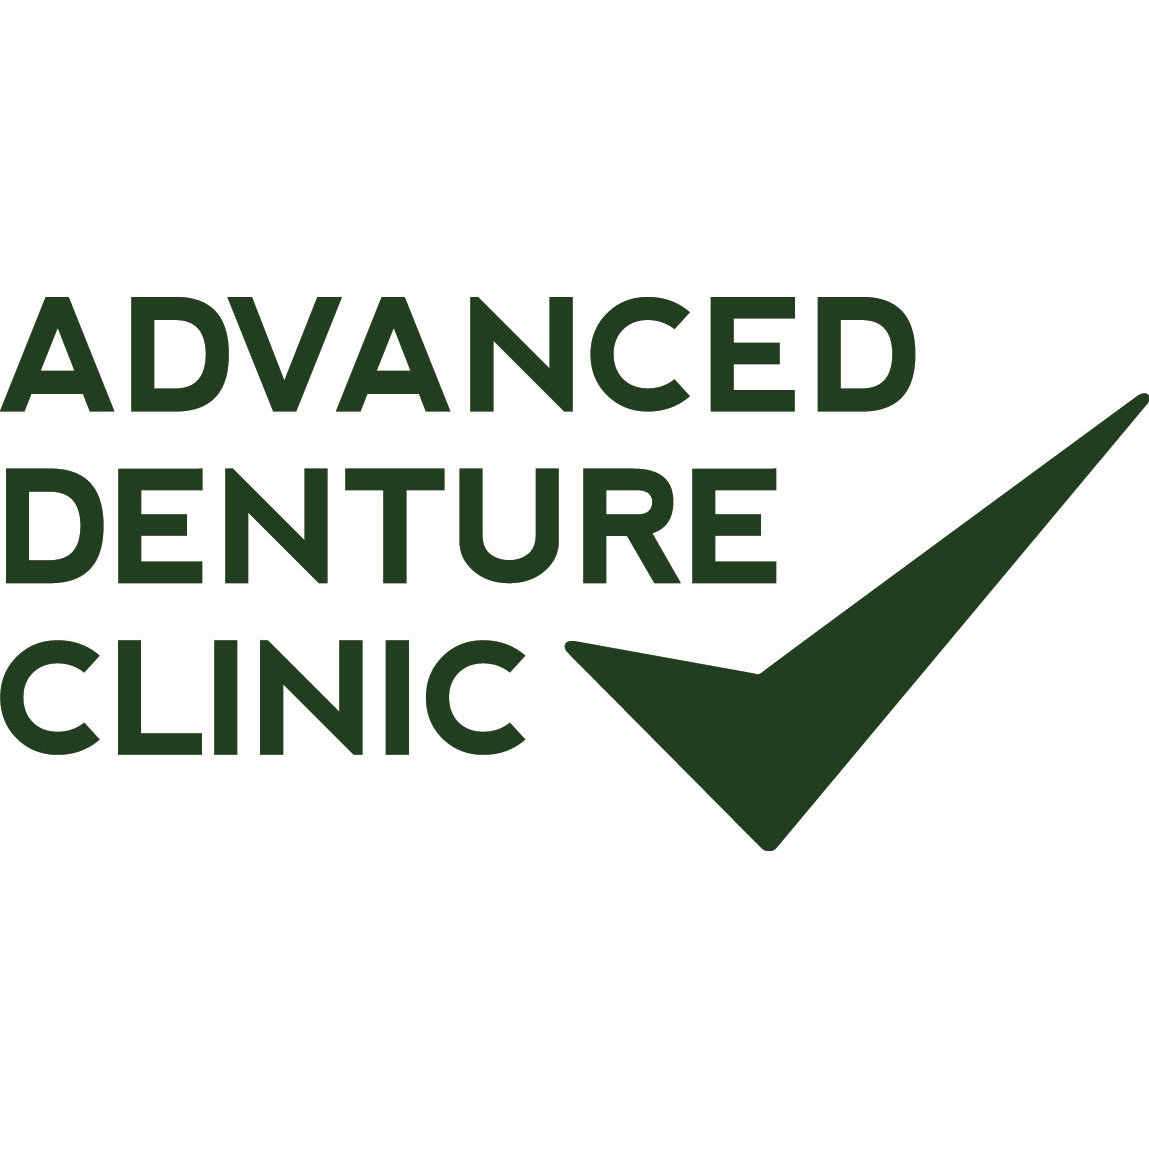 Advanced Denture Clinic logo